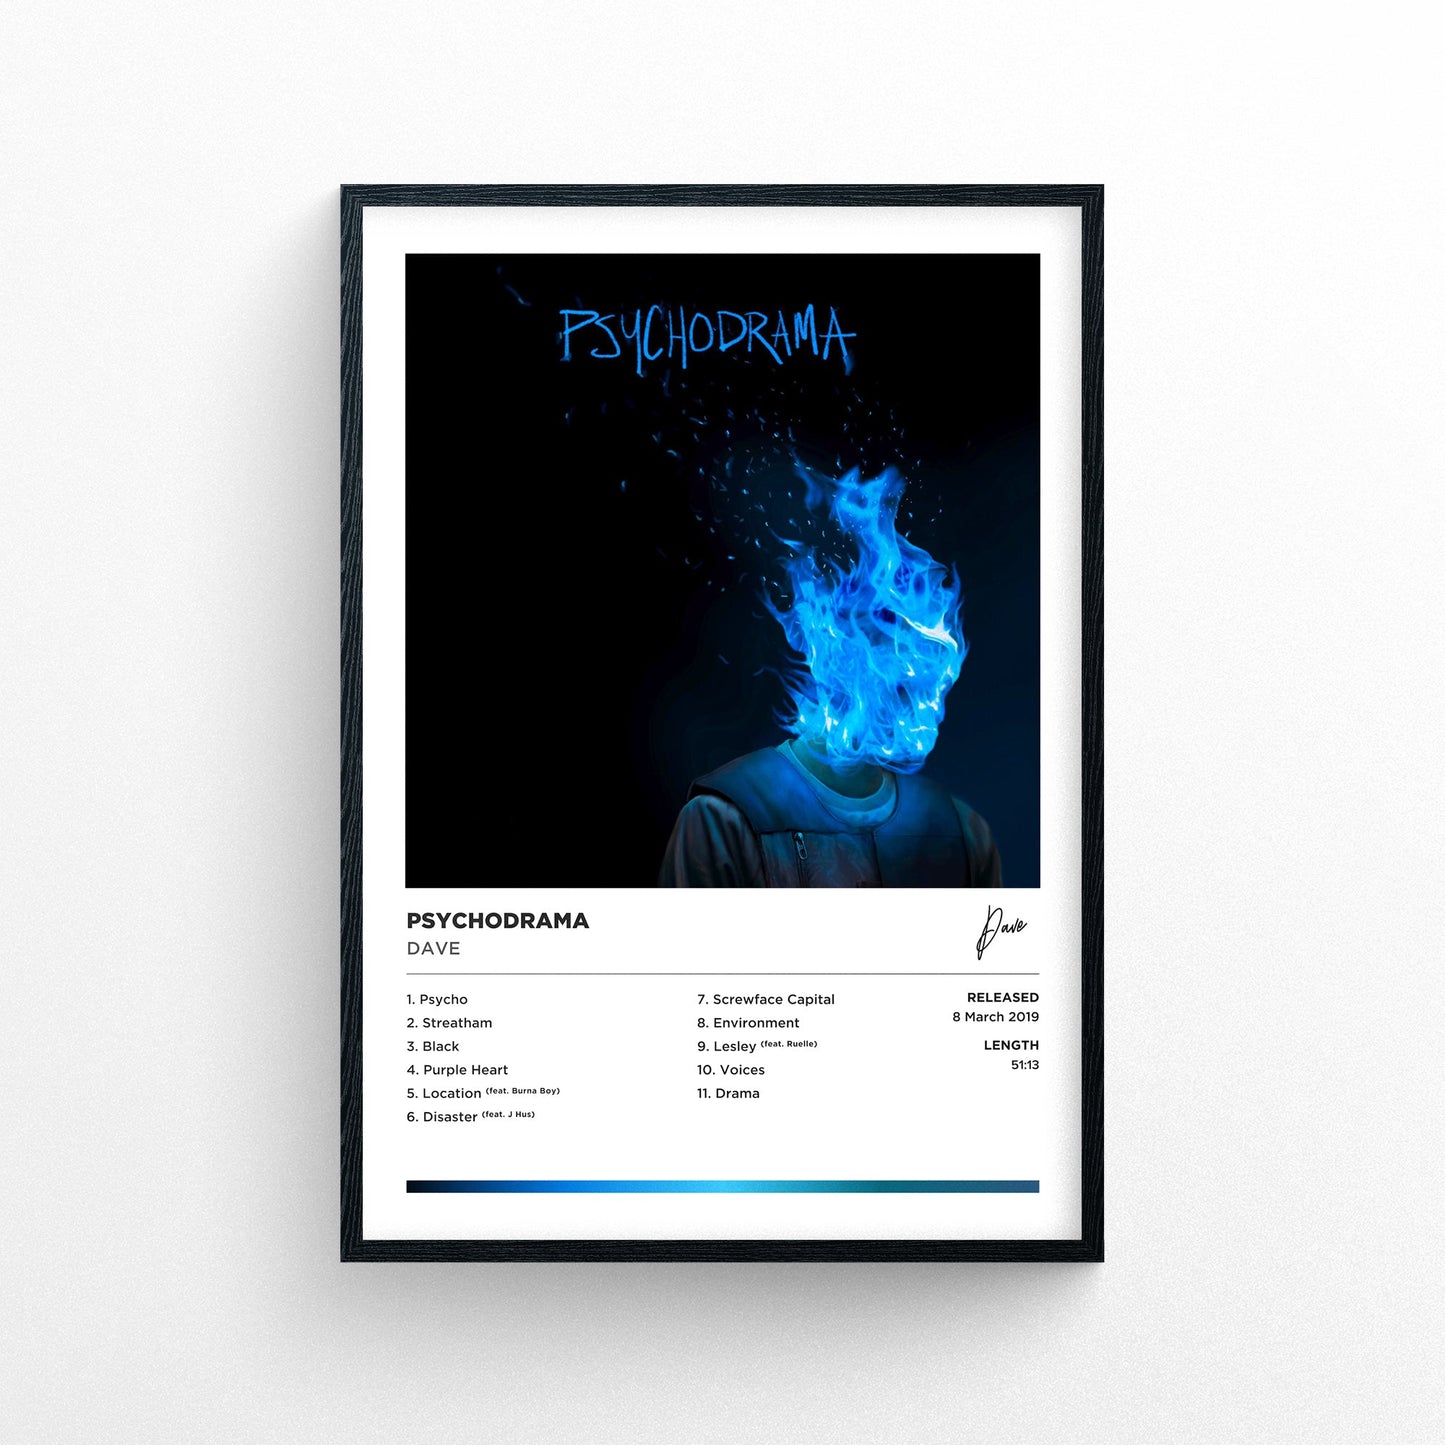 Dave - Psychodrama Framed Poster Print | Polaroid Style | Album Cover Artwork